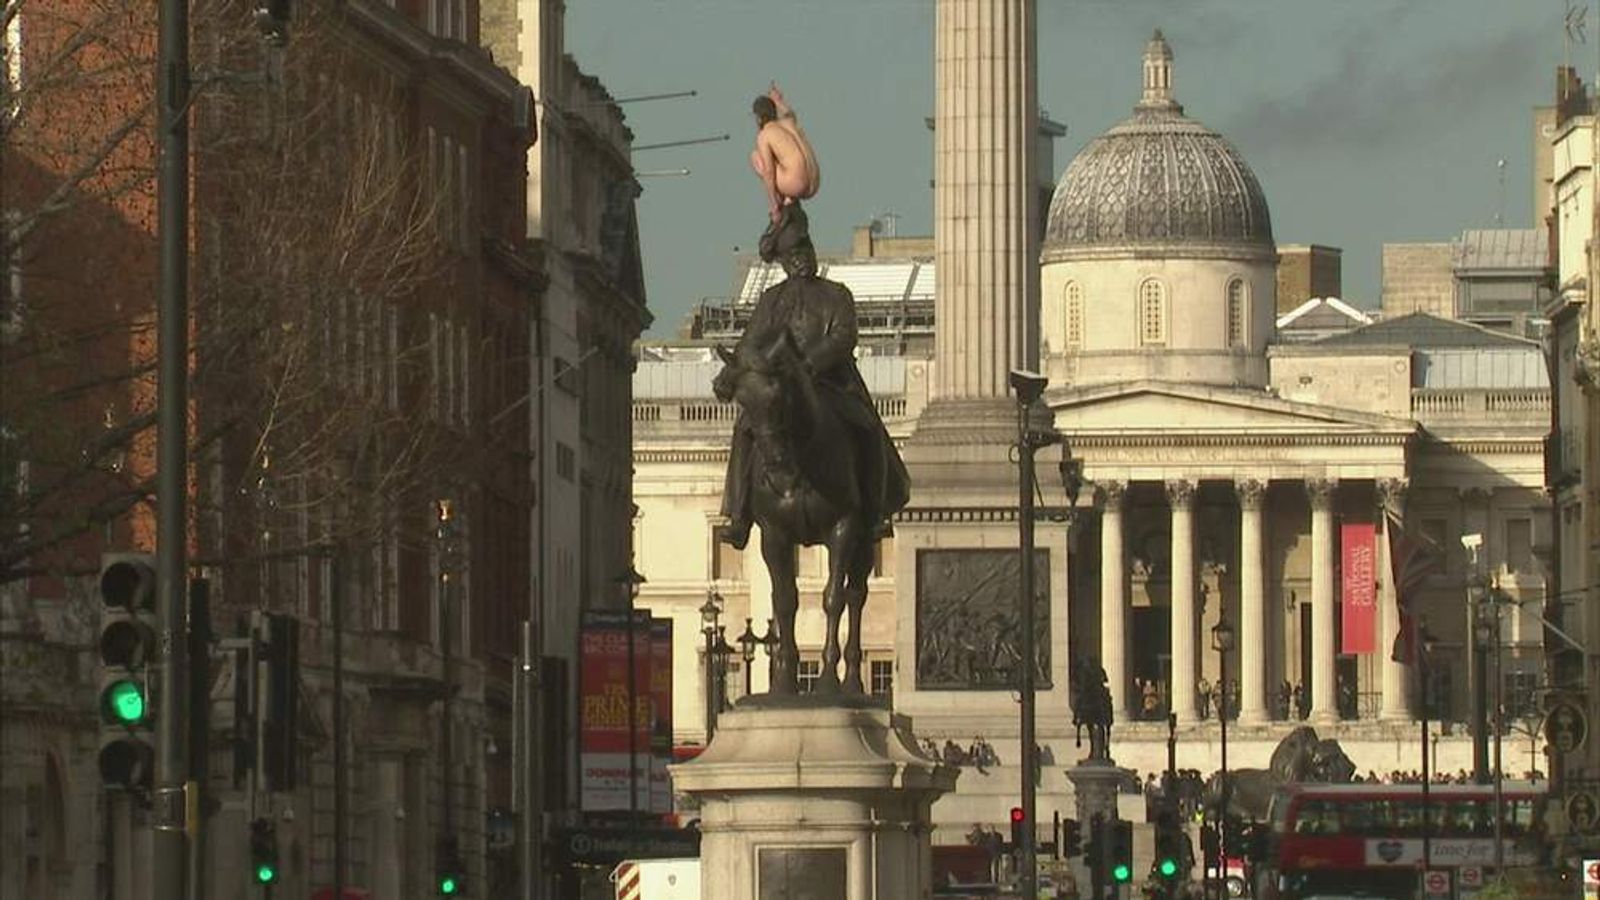 Naked Man Climbs On To Whitehall Statue | UK News | Sky News